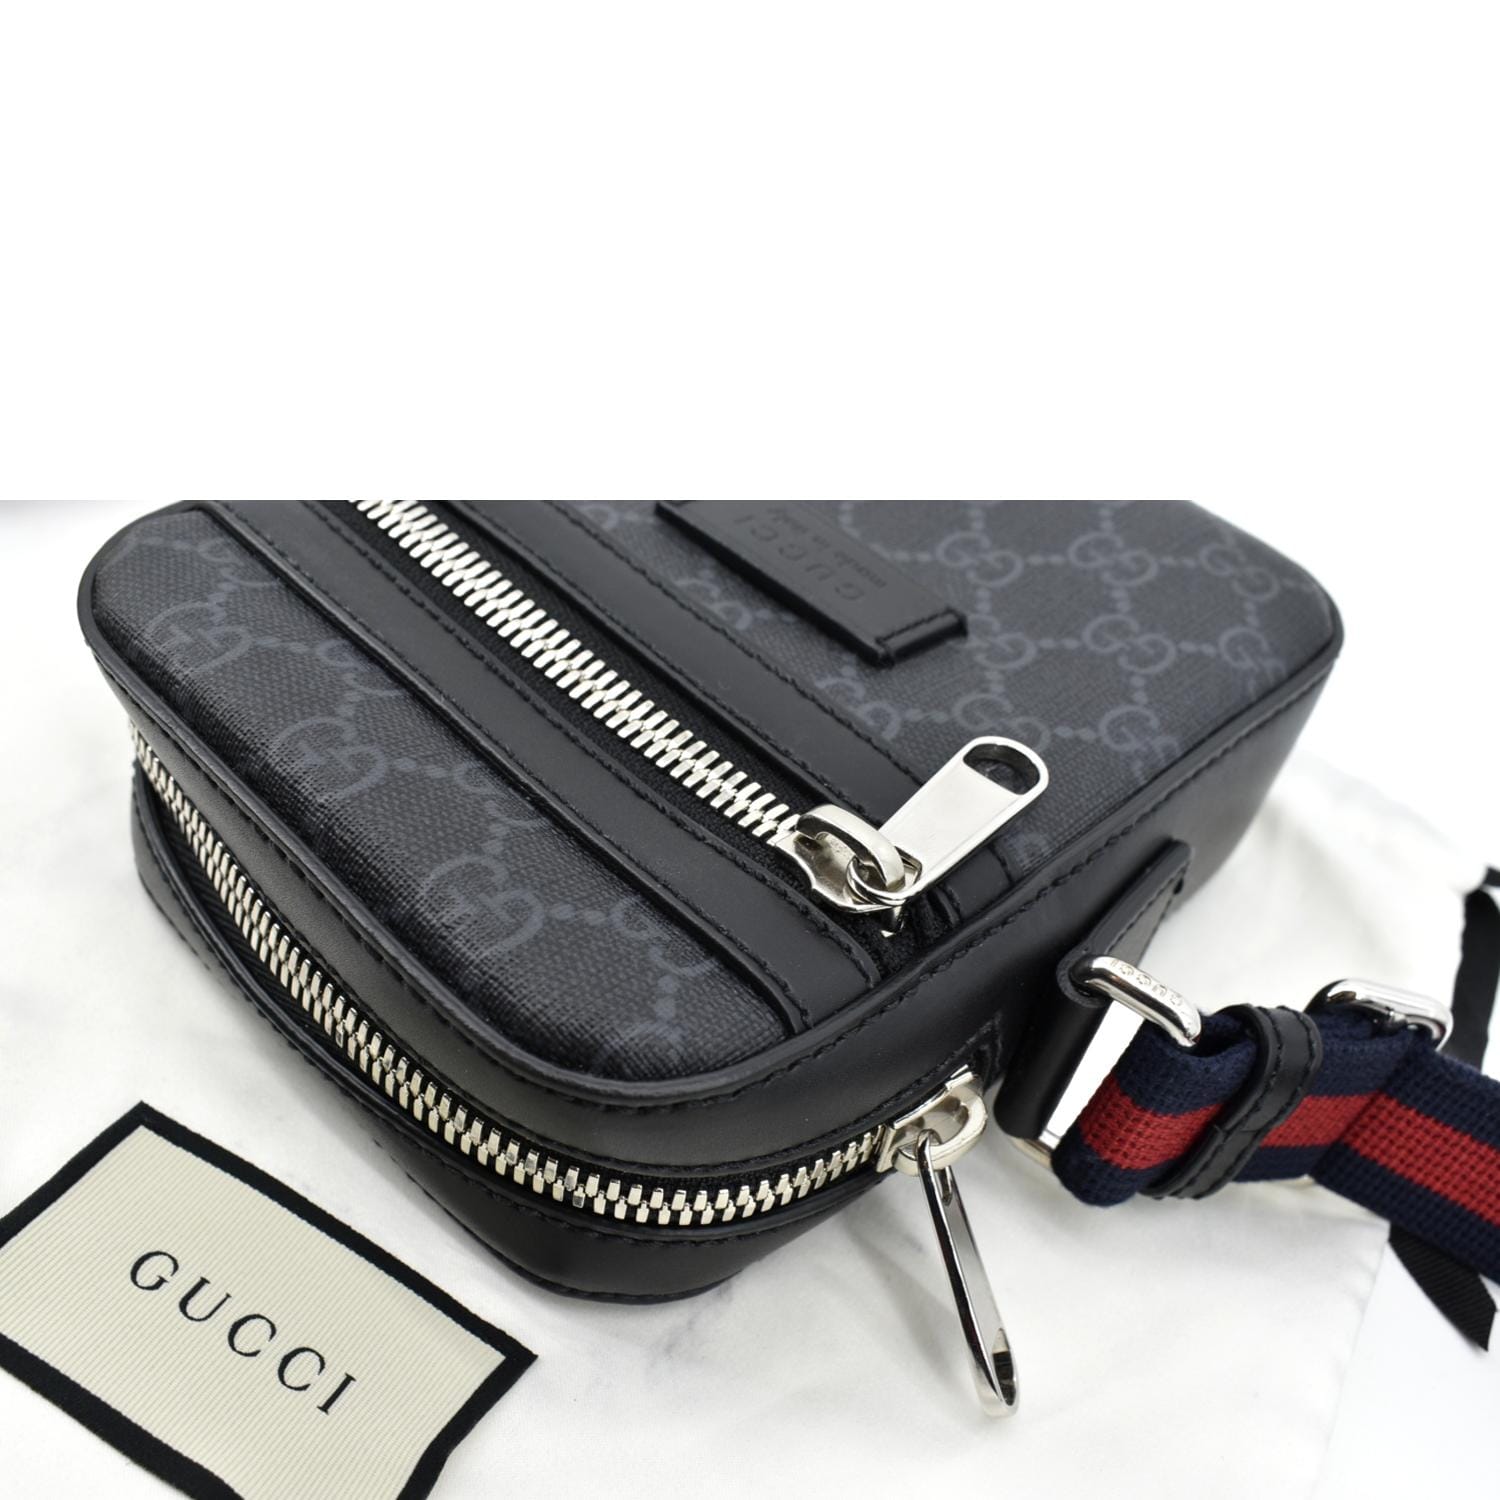 Gucci Gg Supreme Leather Cross-body Bag - Black